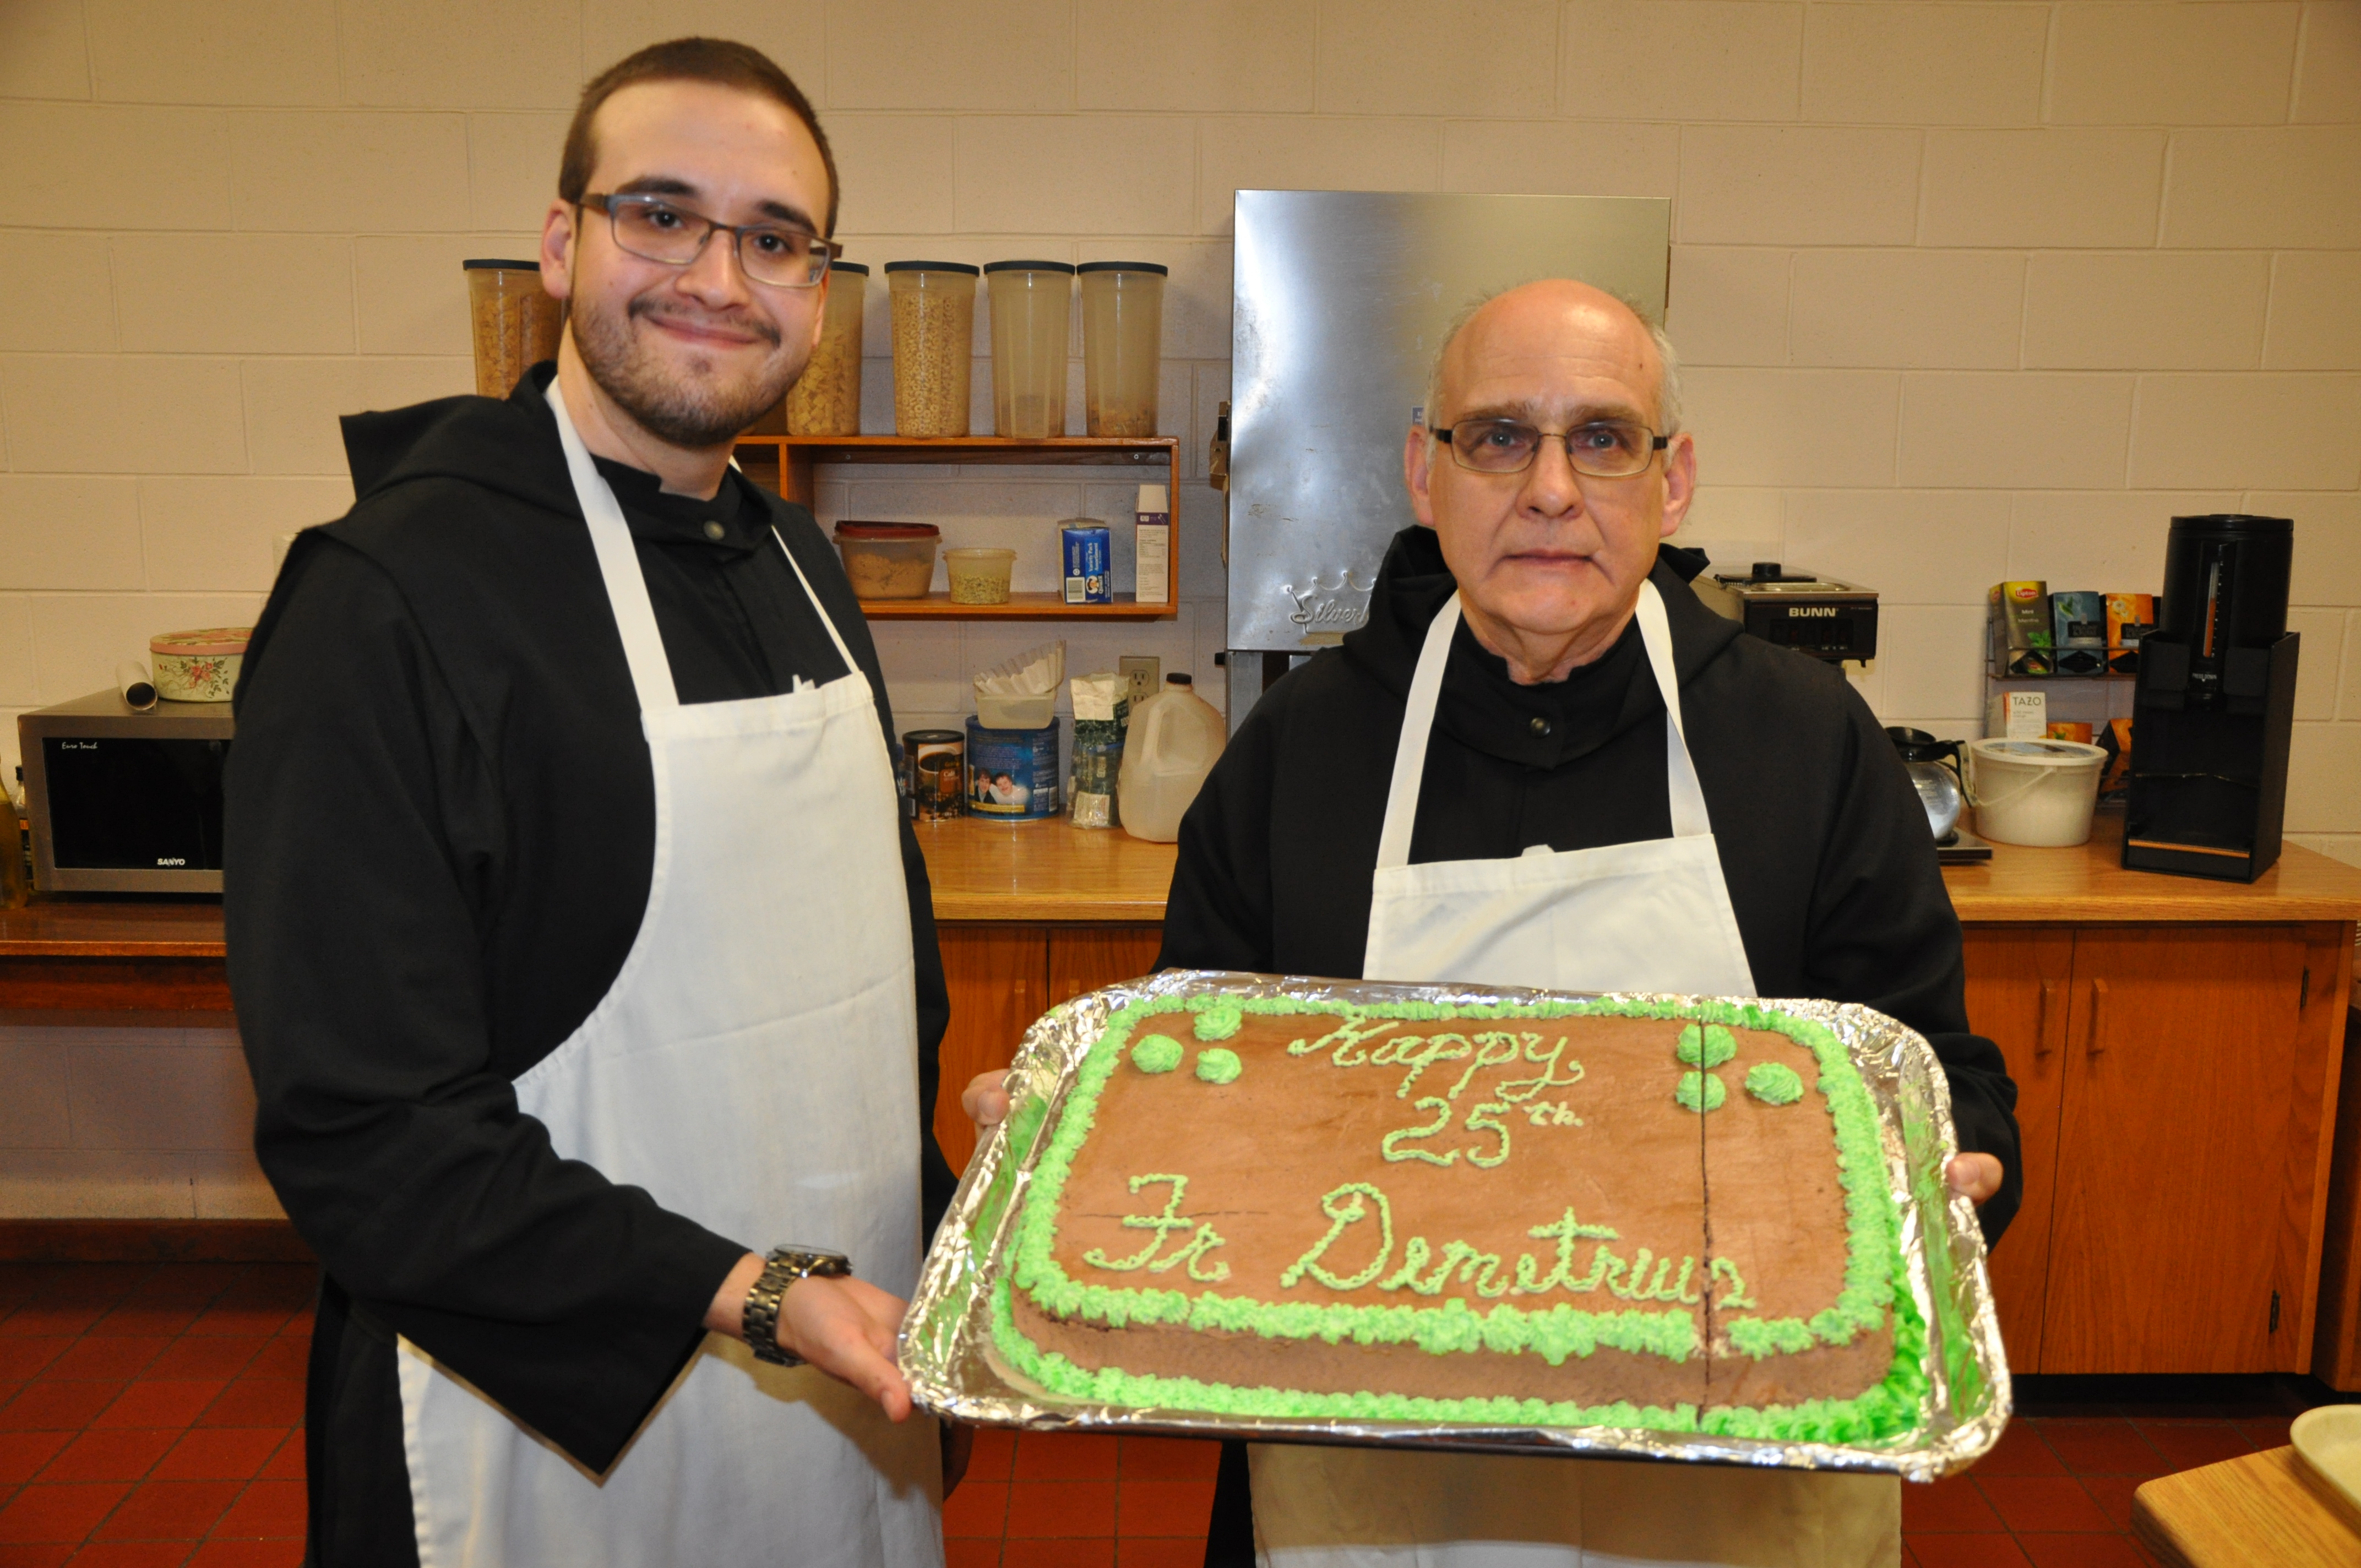 Father Demetrius' 25th Anniversary of Profession.